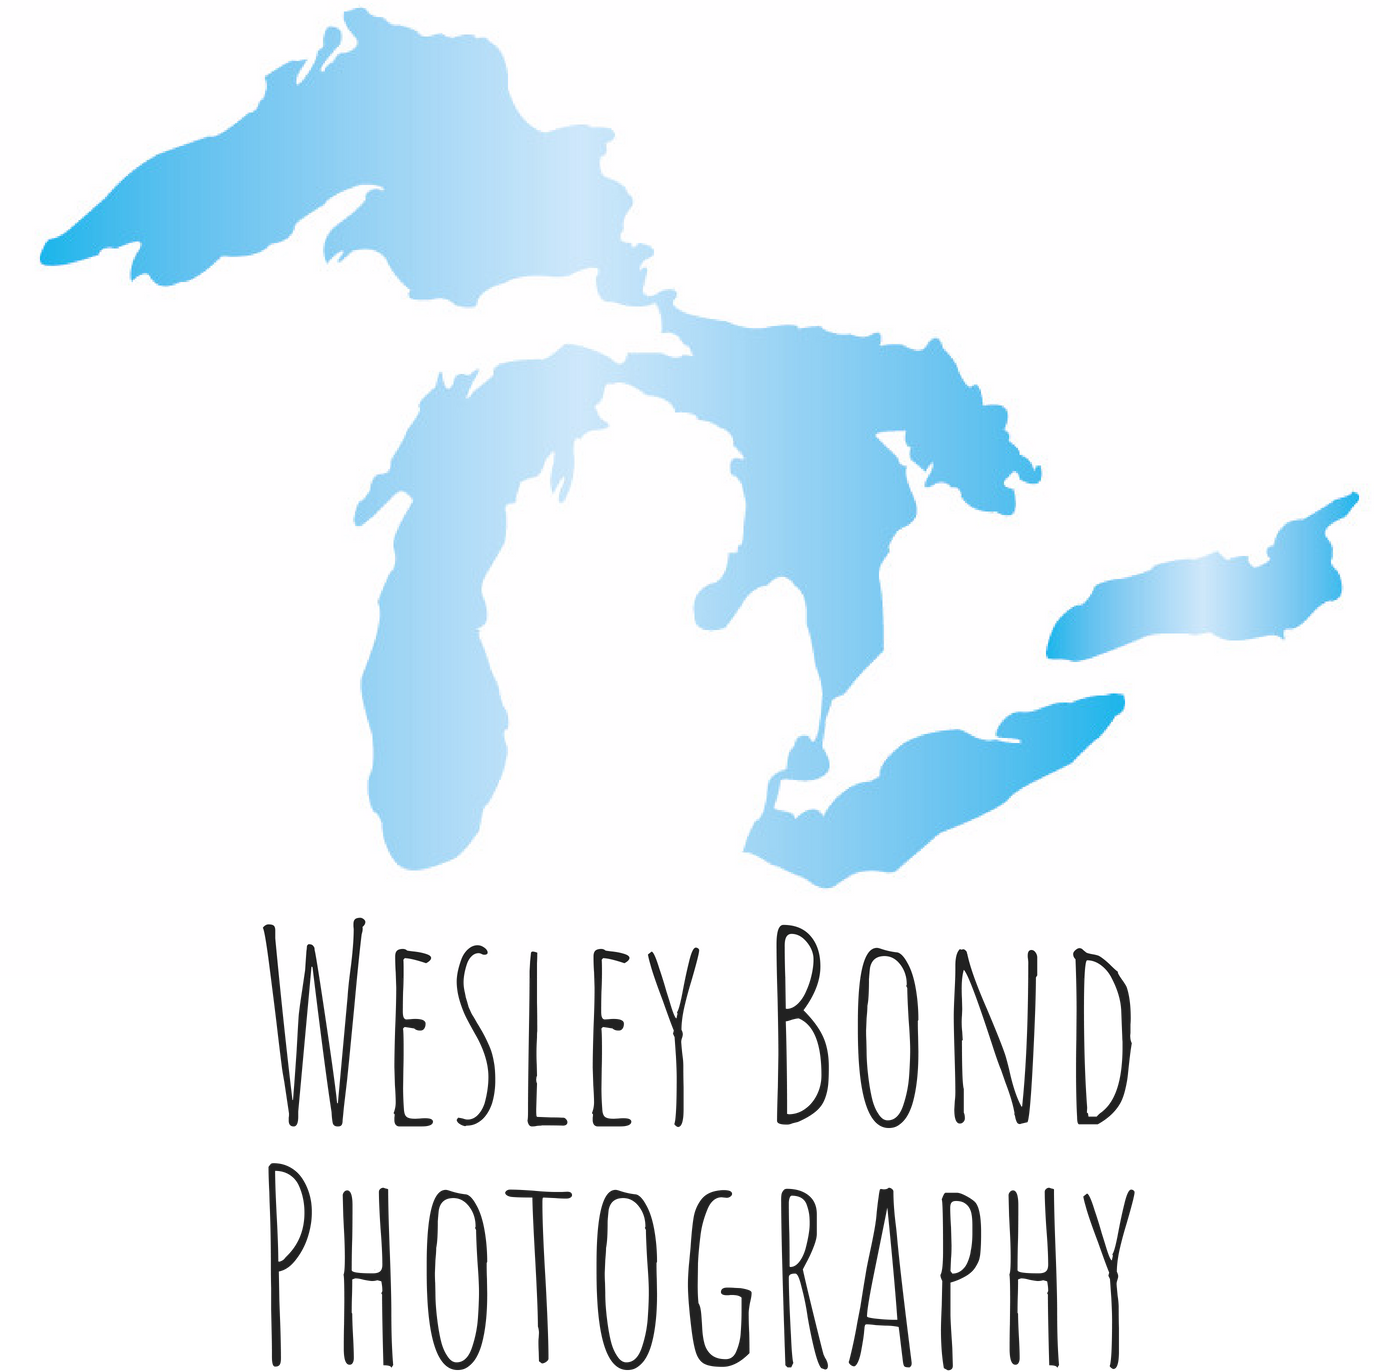 Wesley Bond Photography-Traverse City Area Portrait Photography